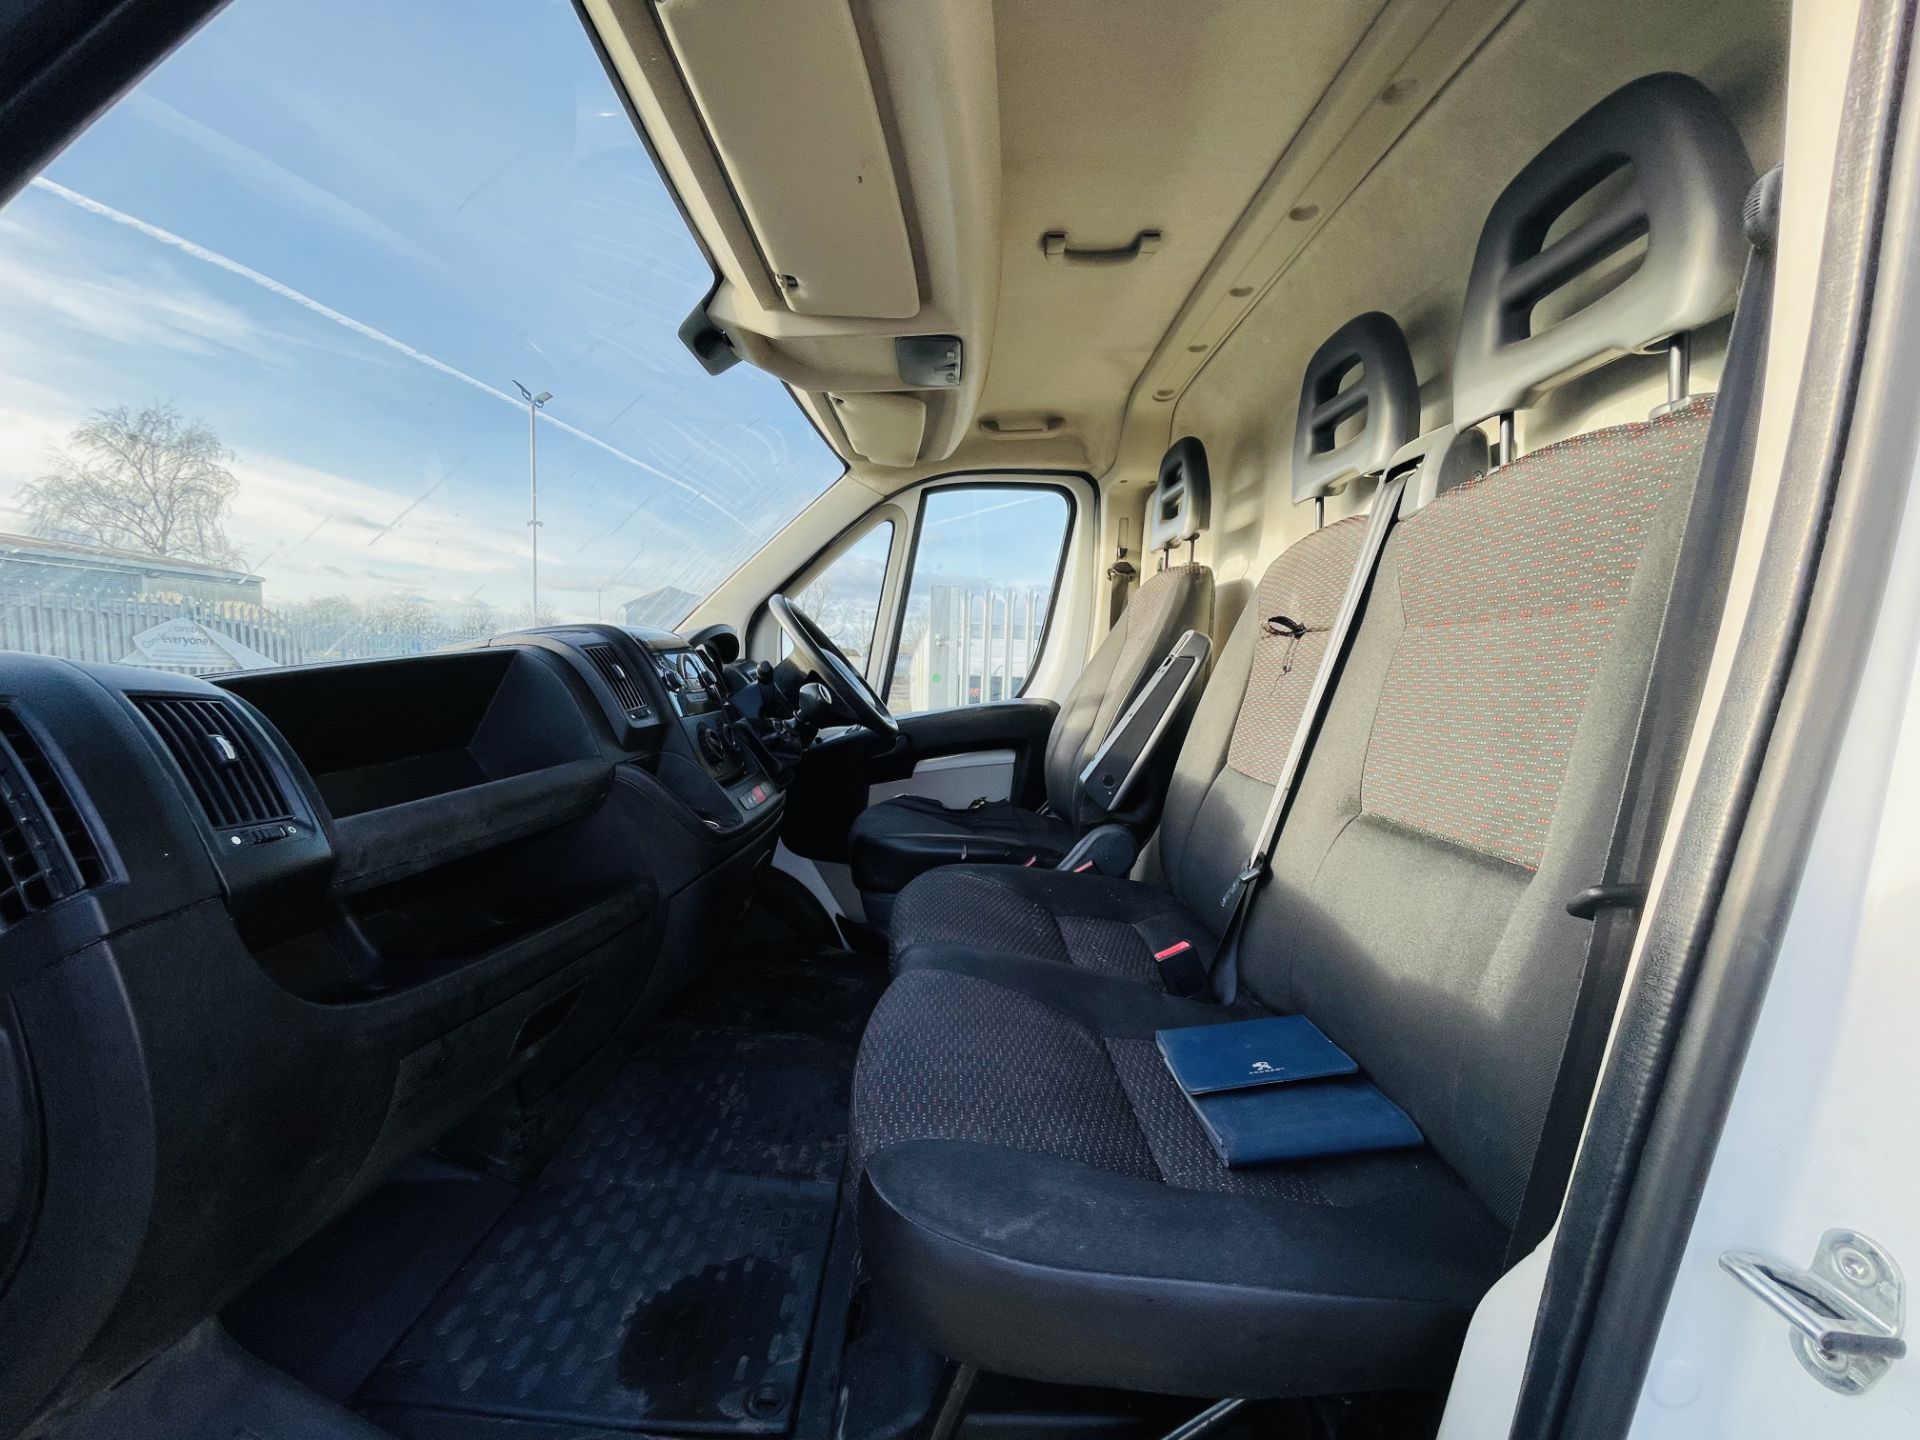 ** ON SALE ** Peugeot Boxer 2.2 HDI 130 335 L3 H2 2015 '64 Reg' Elec Pack - Panel Van - Image 14 of 21